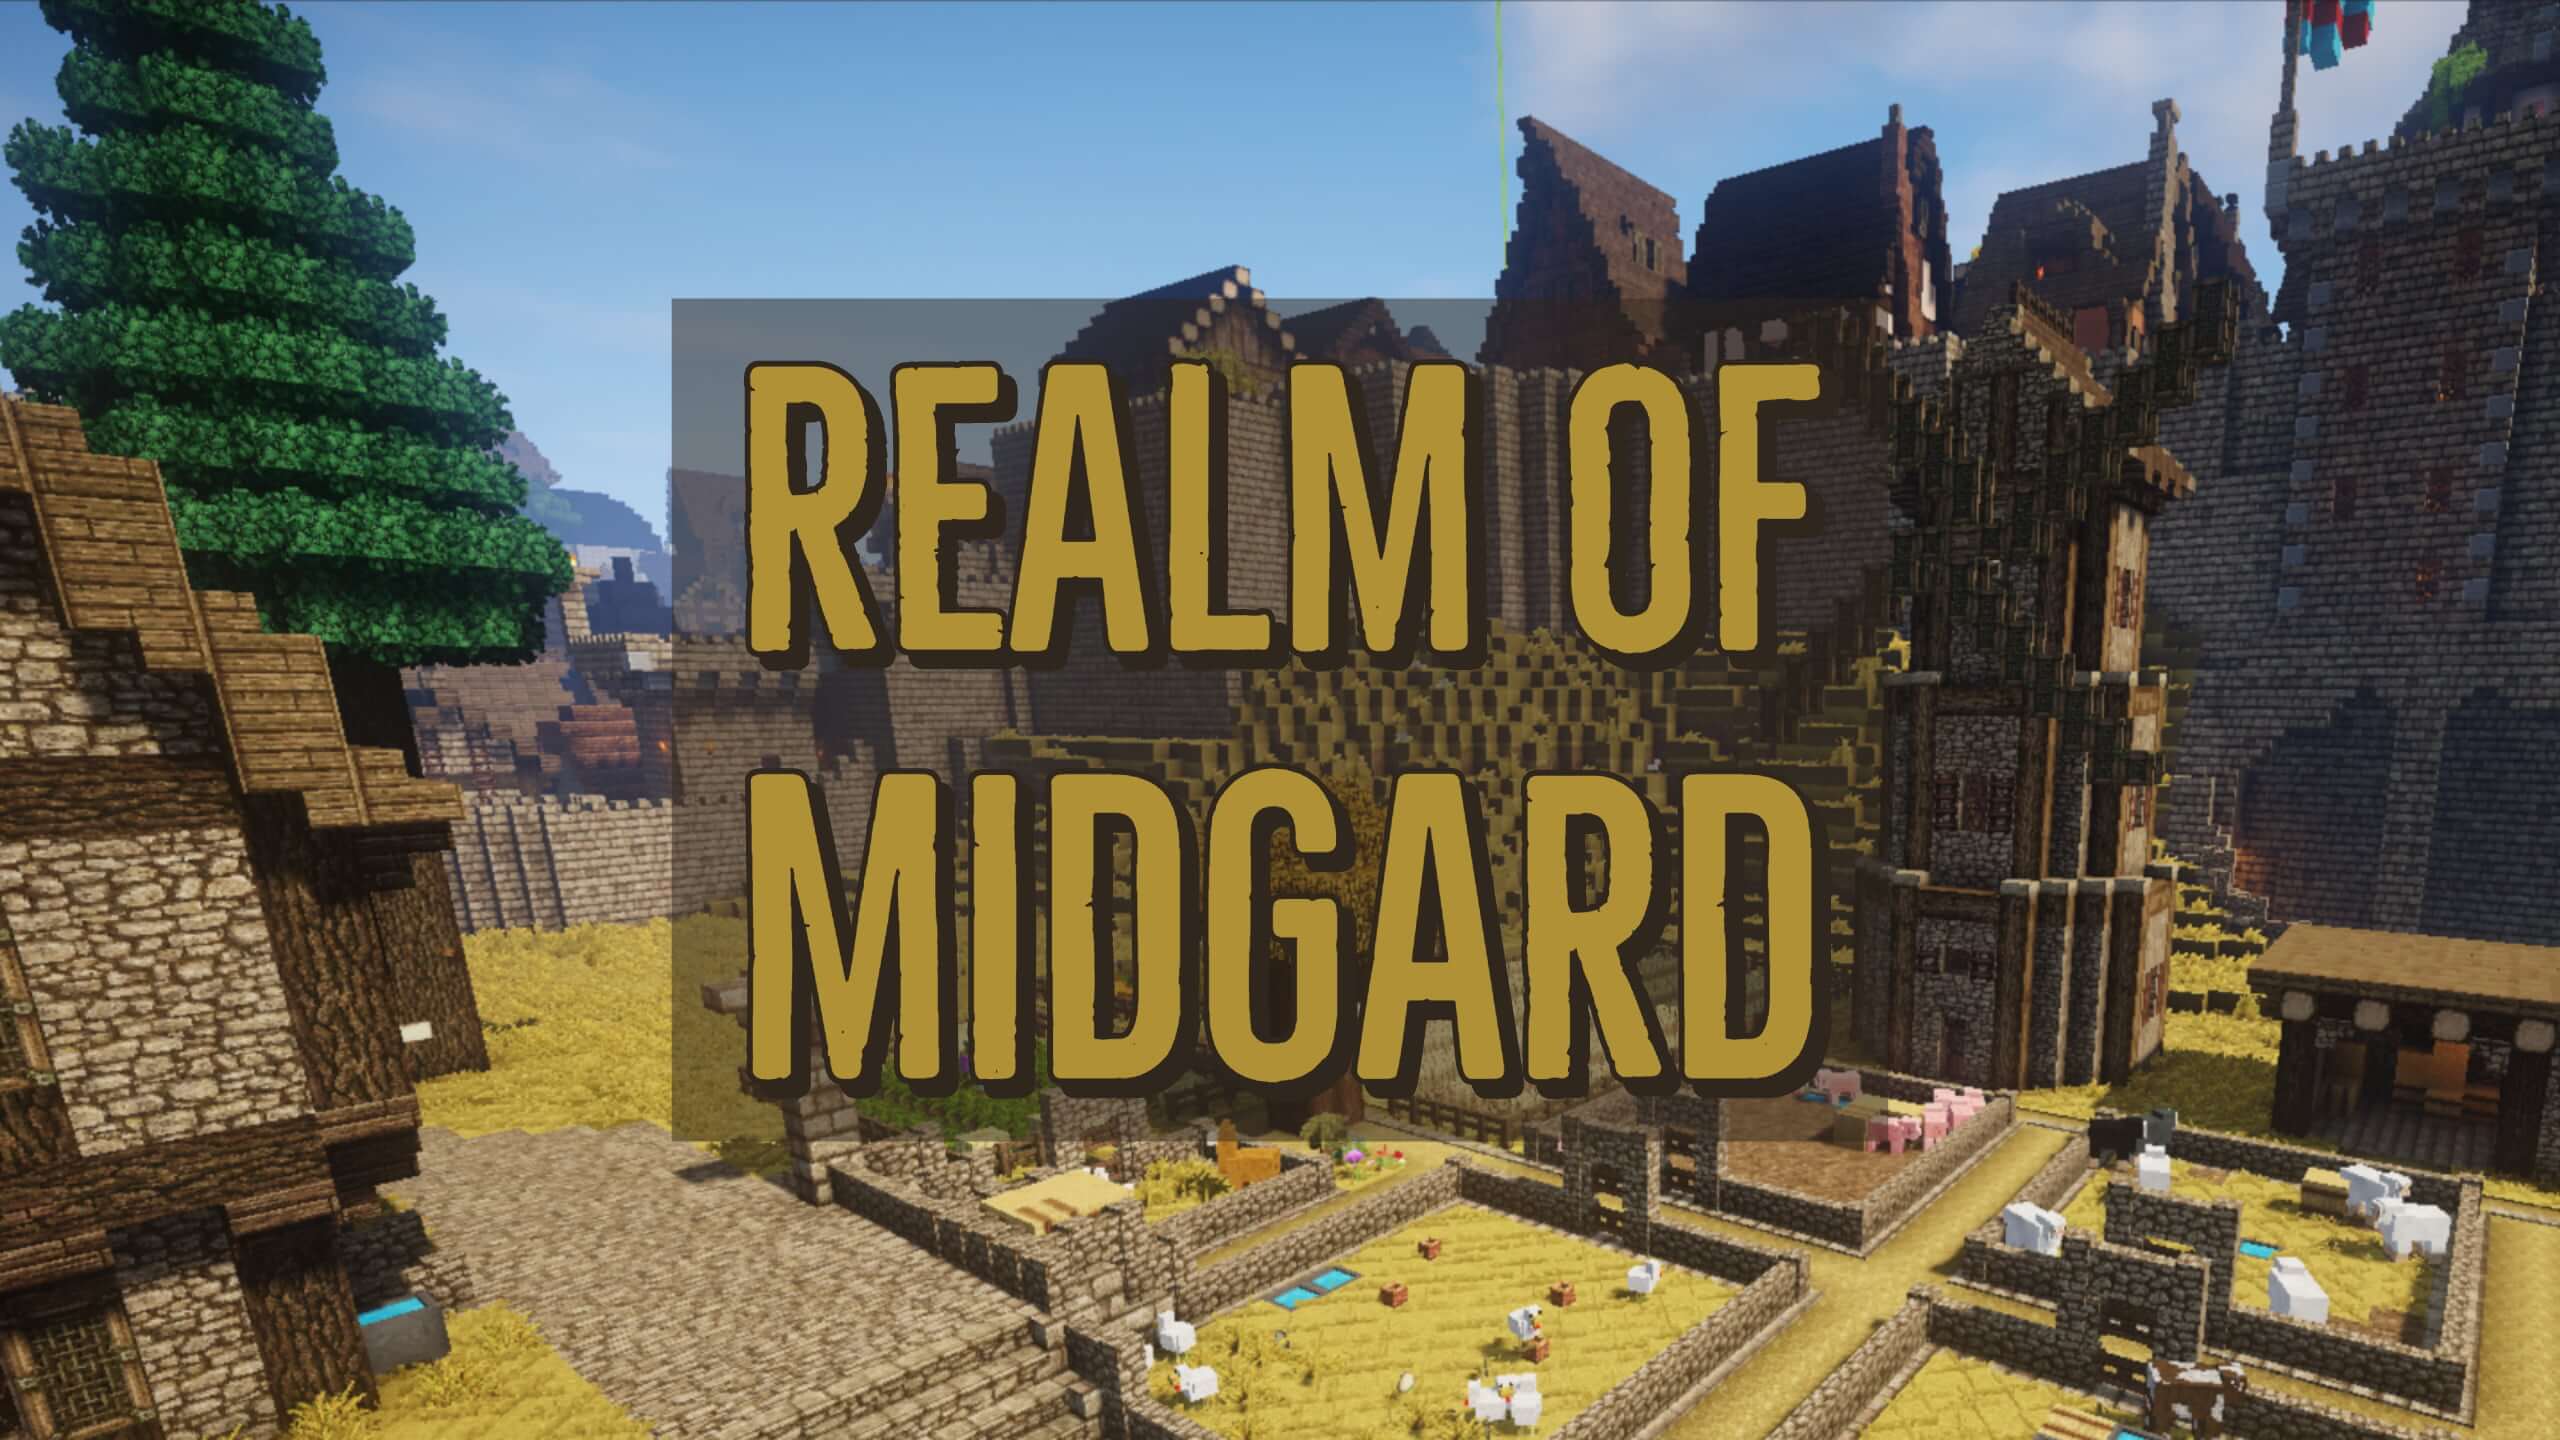 Realm of Midgard Screenshot 1